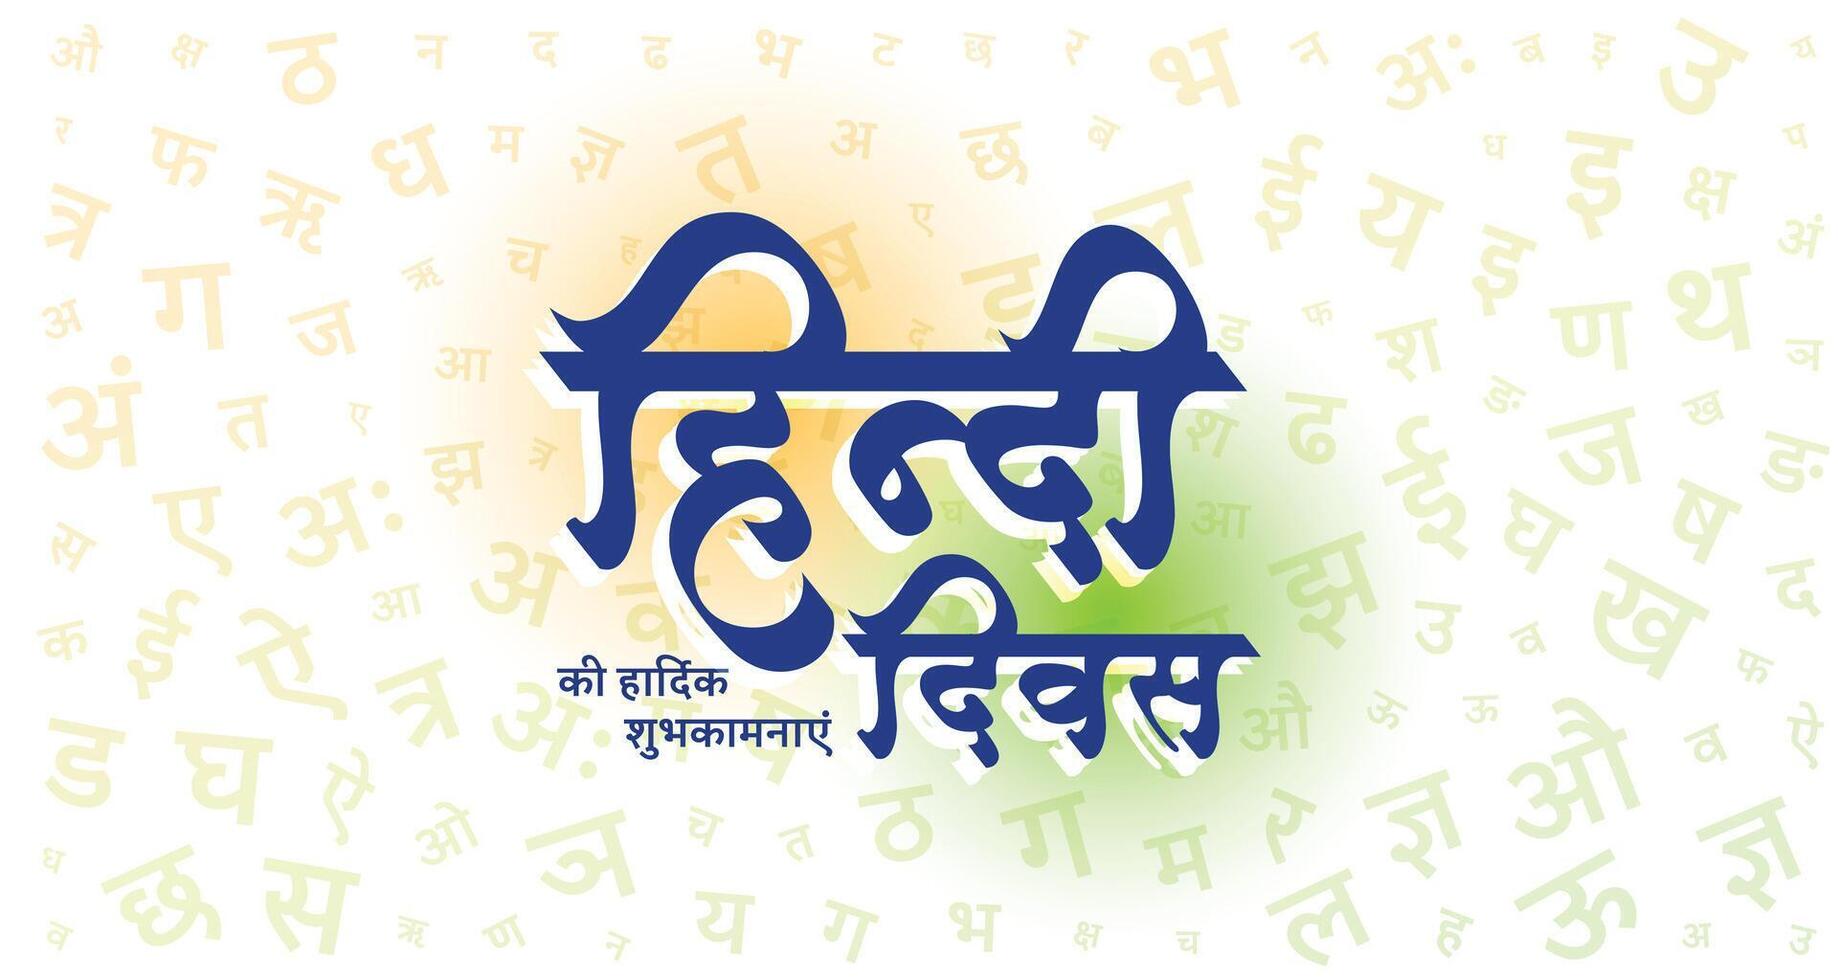 hindi diwas händelse baner design med brev mönster vektor